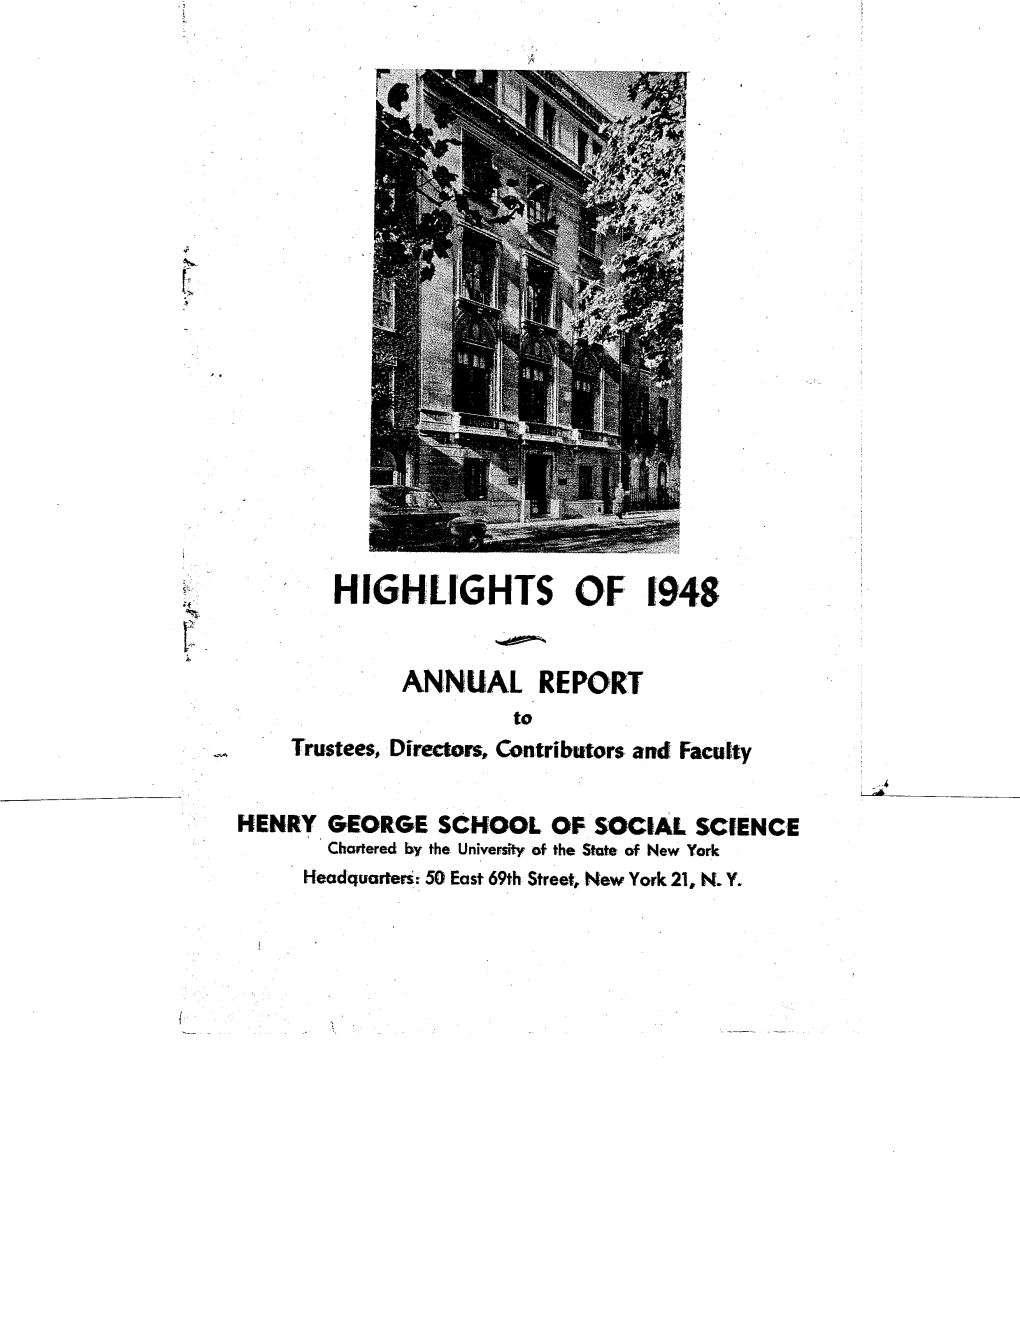 Highlights of 1948